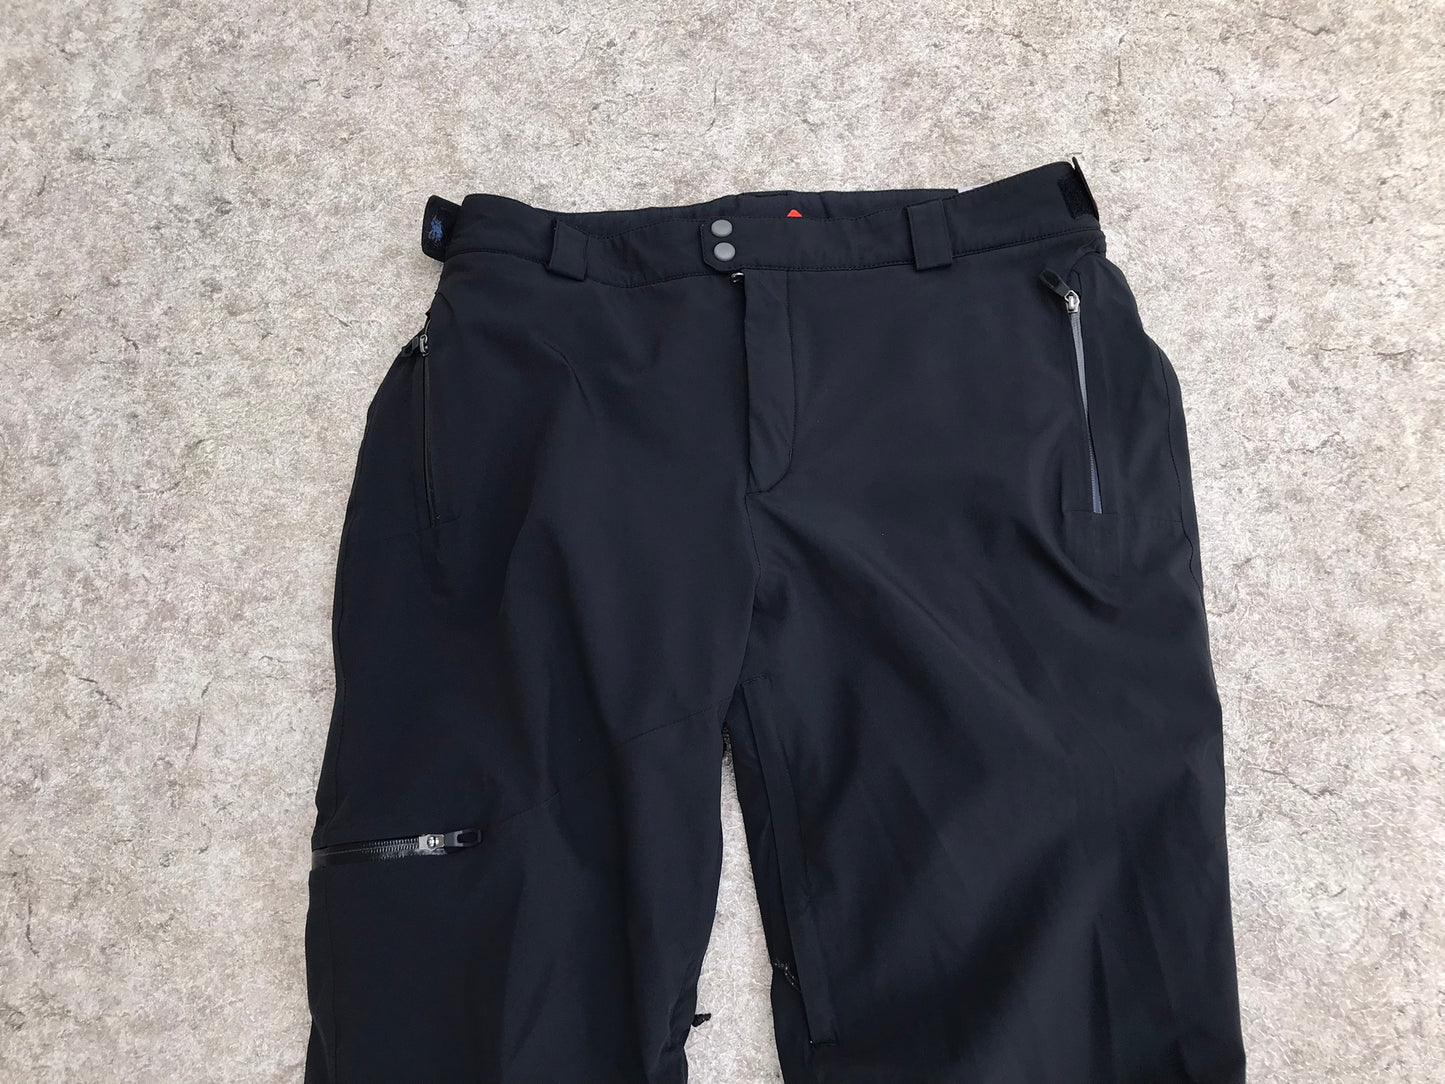 Snow Pants Ladies Size X Large Columbia Omni Heat Black Waterproof Sealed Seam Zippers New Demo Model